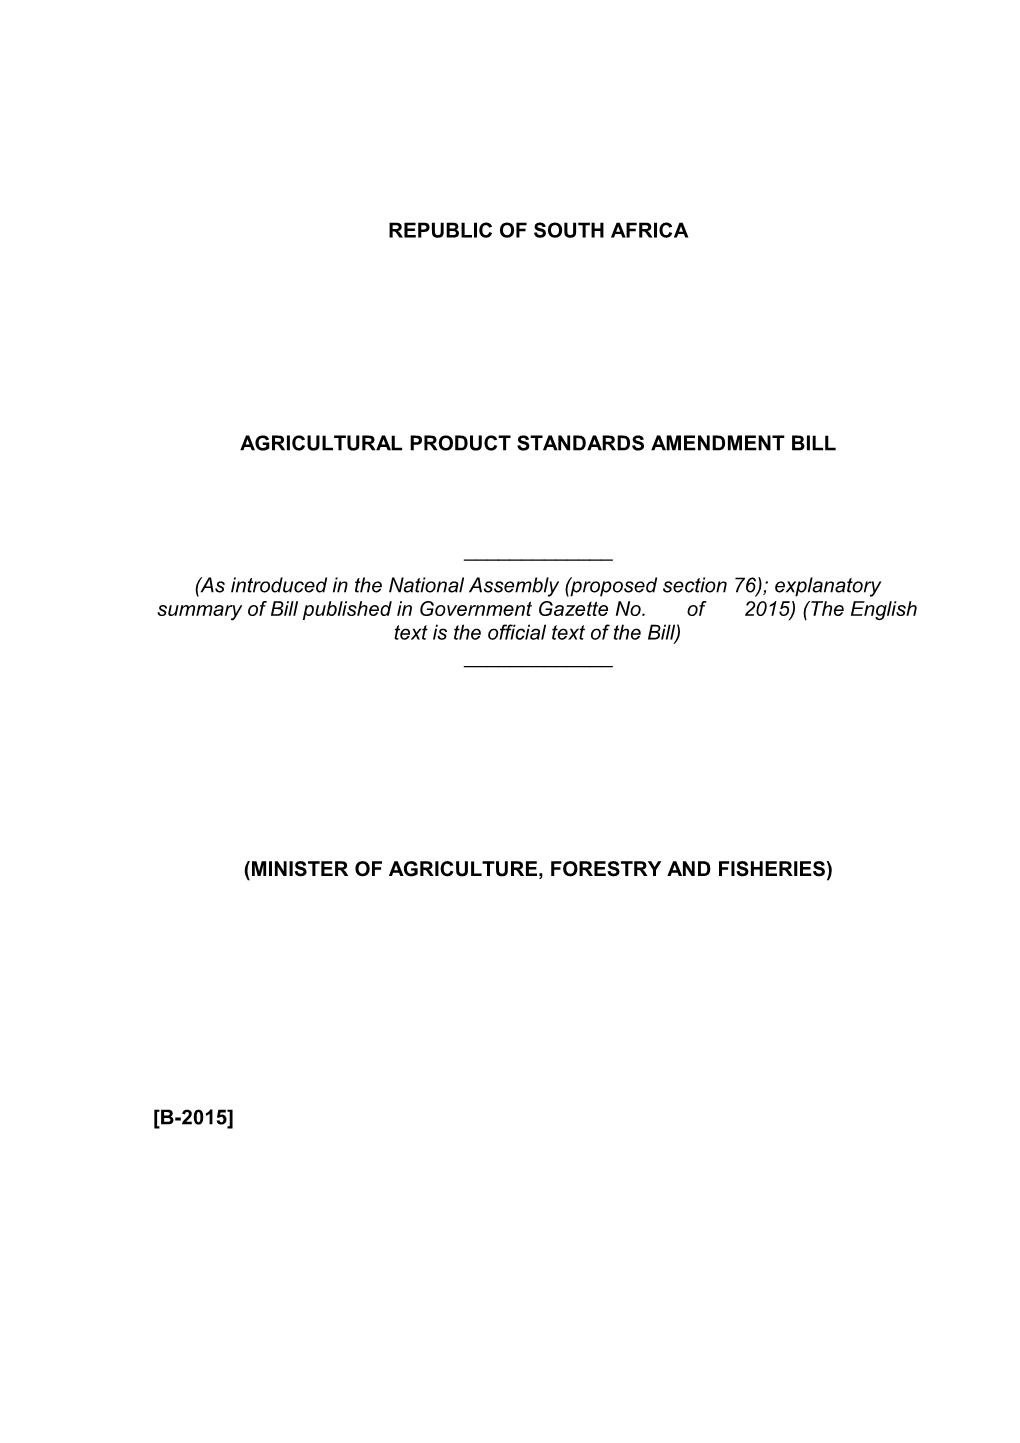 Agricultural Product Standards Amendment Bill